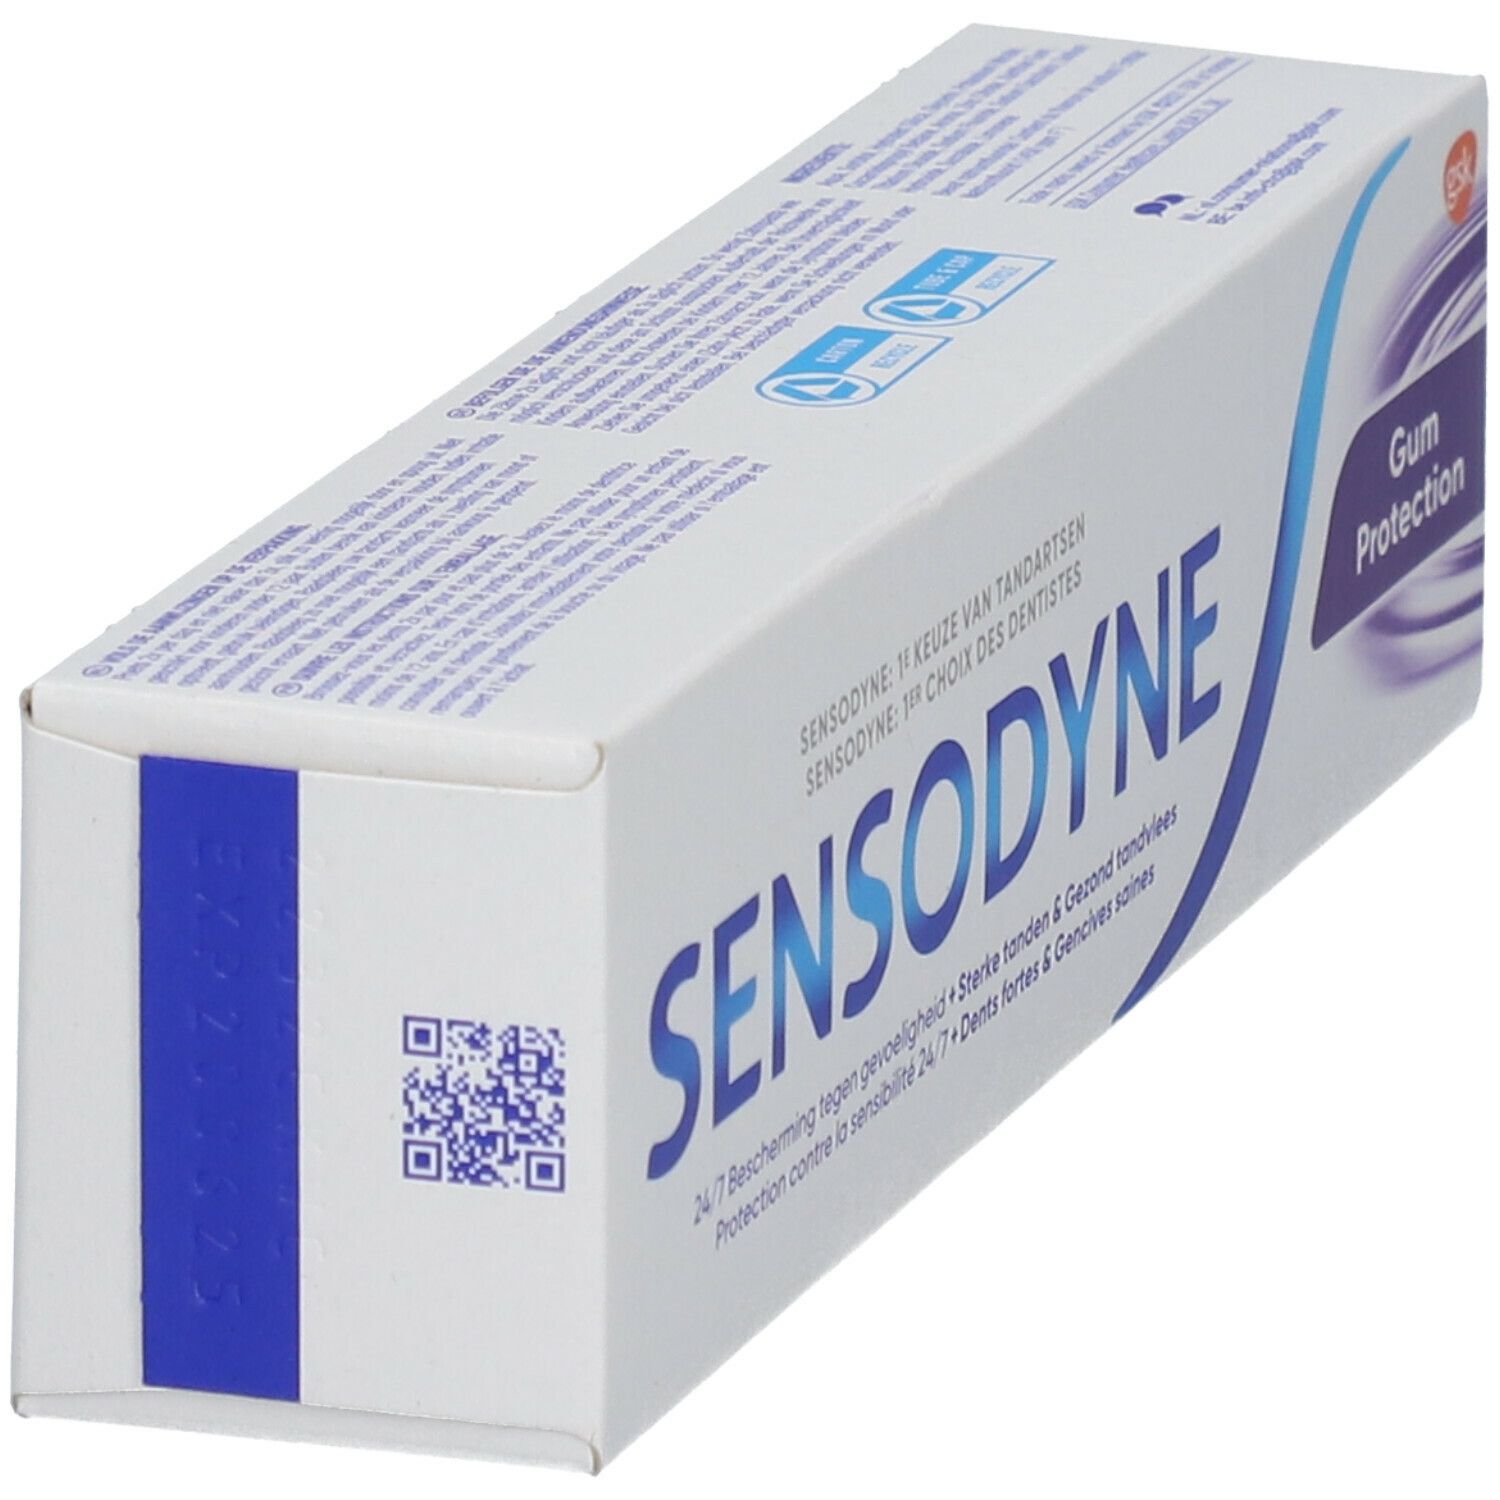 Sensodyne Gum Protection Dentifrice